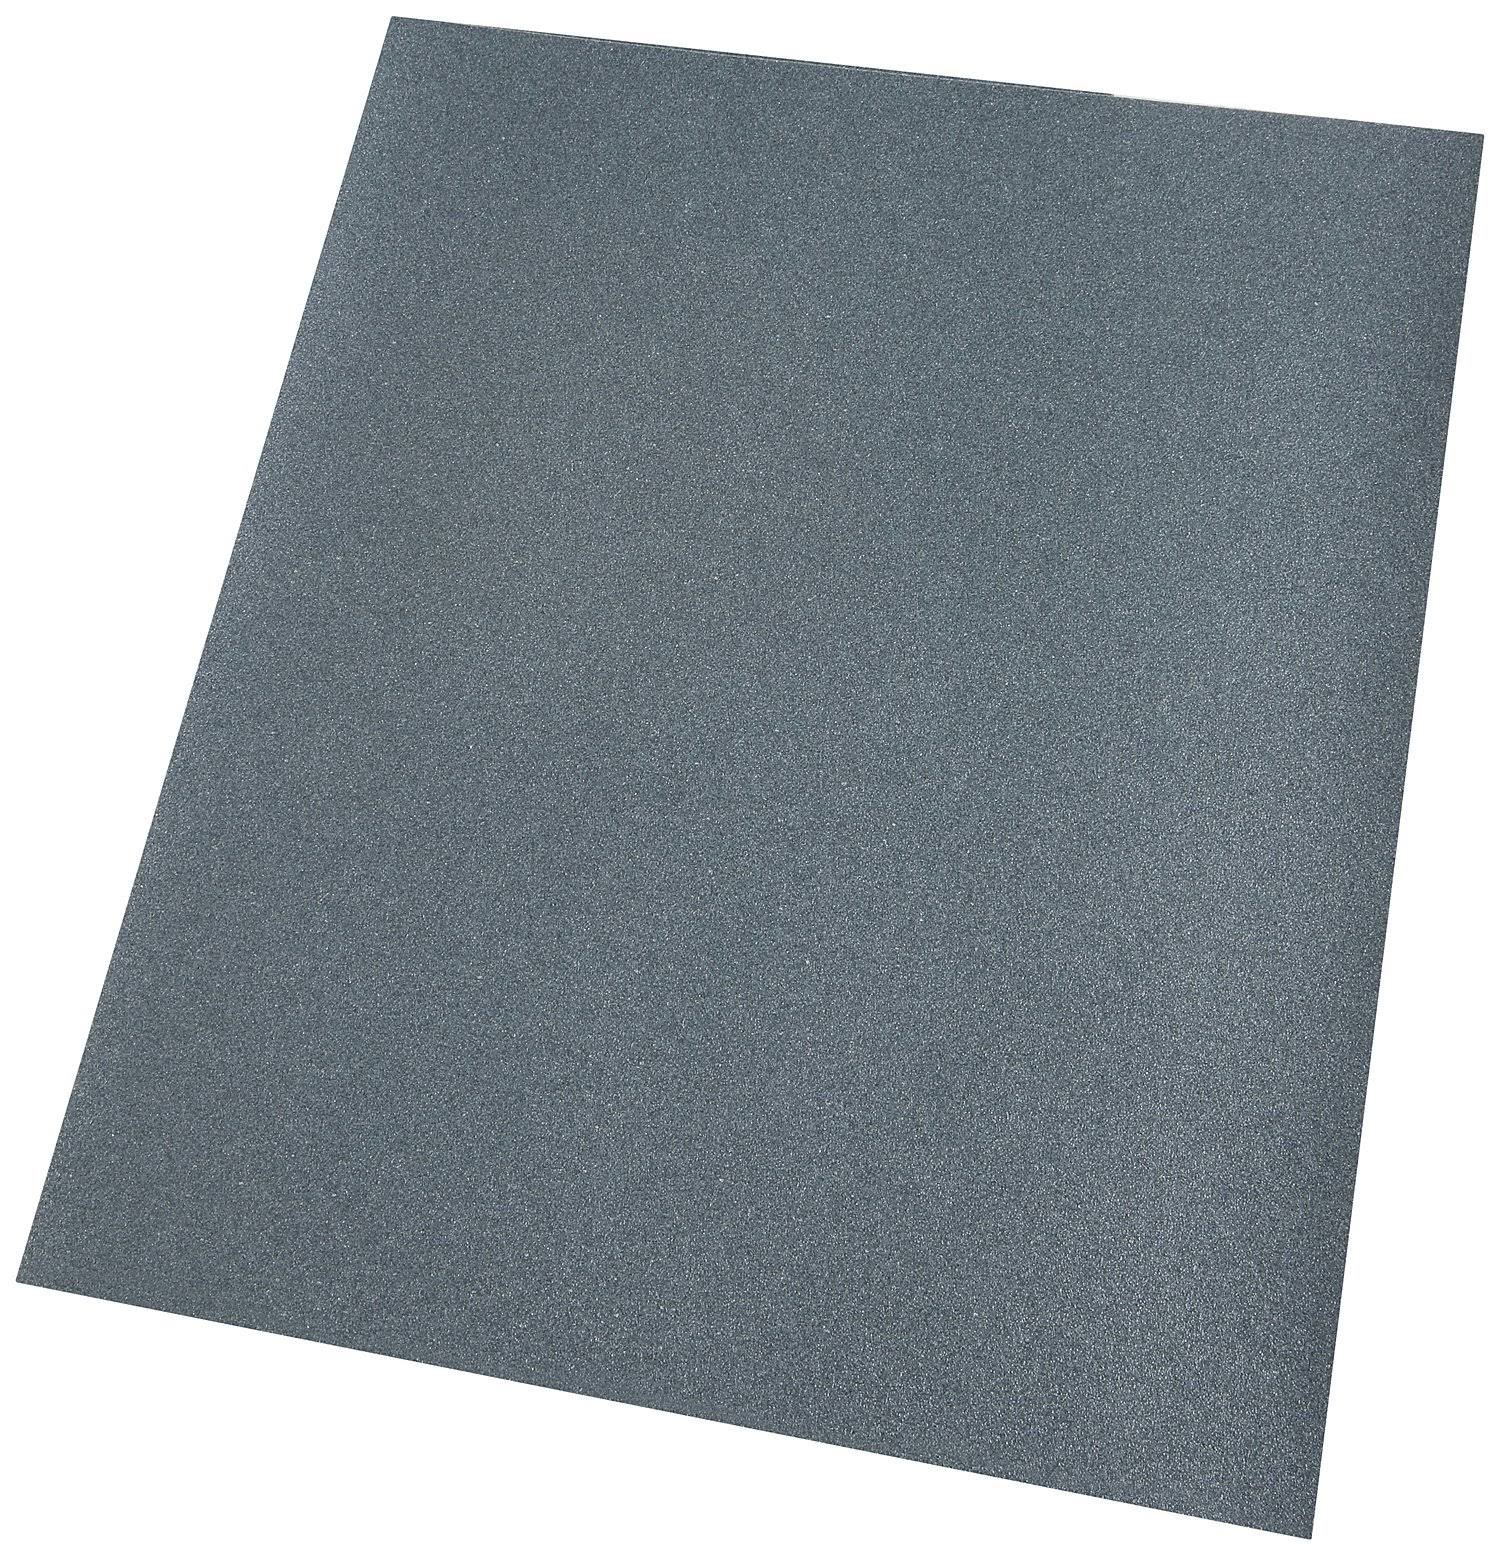 3M Wetordry Sandpaper Sheets - 9"x11", 25 Pack